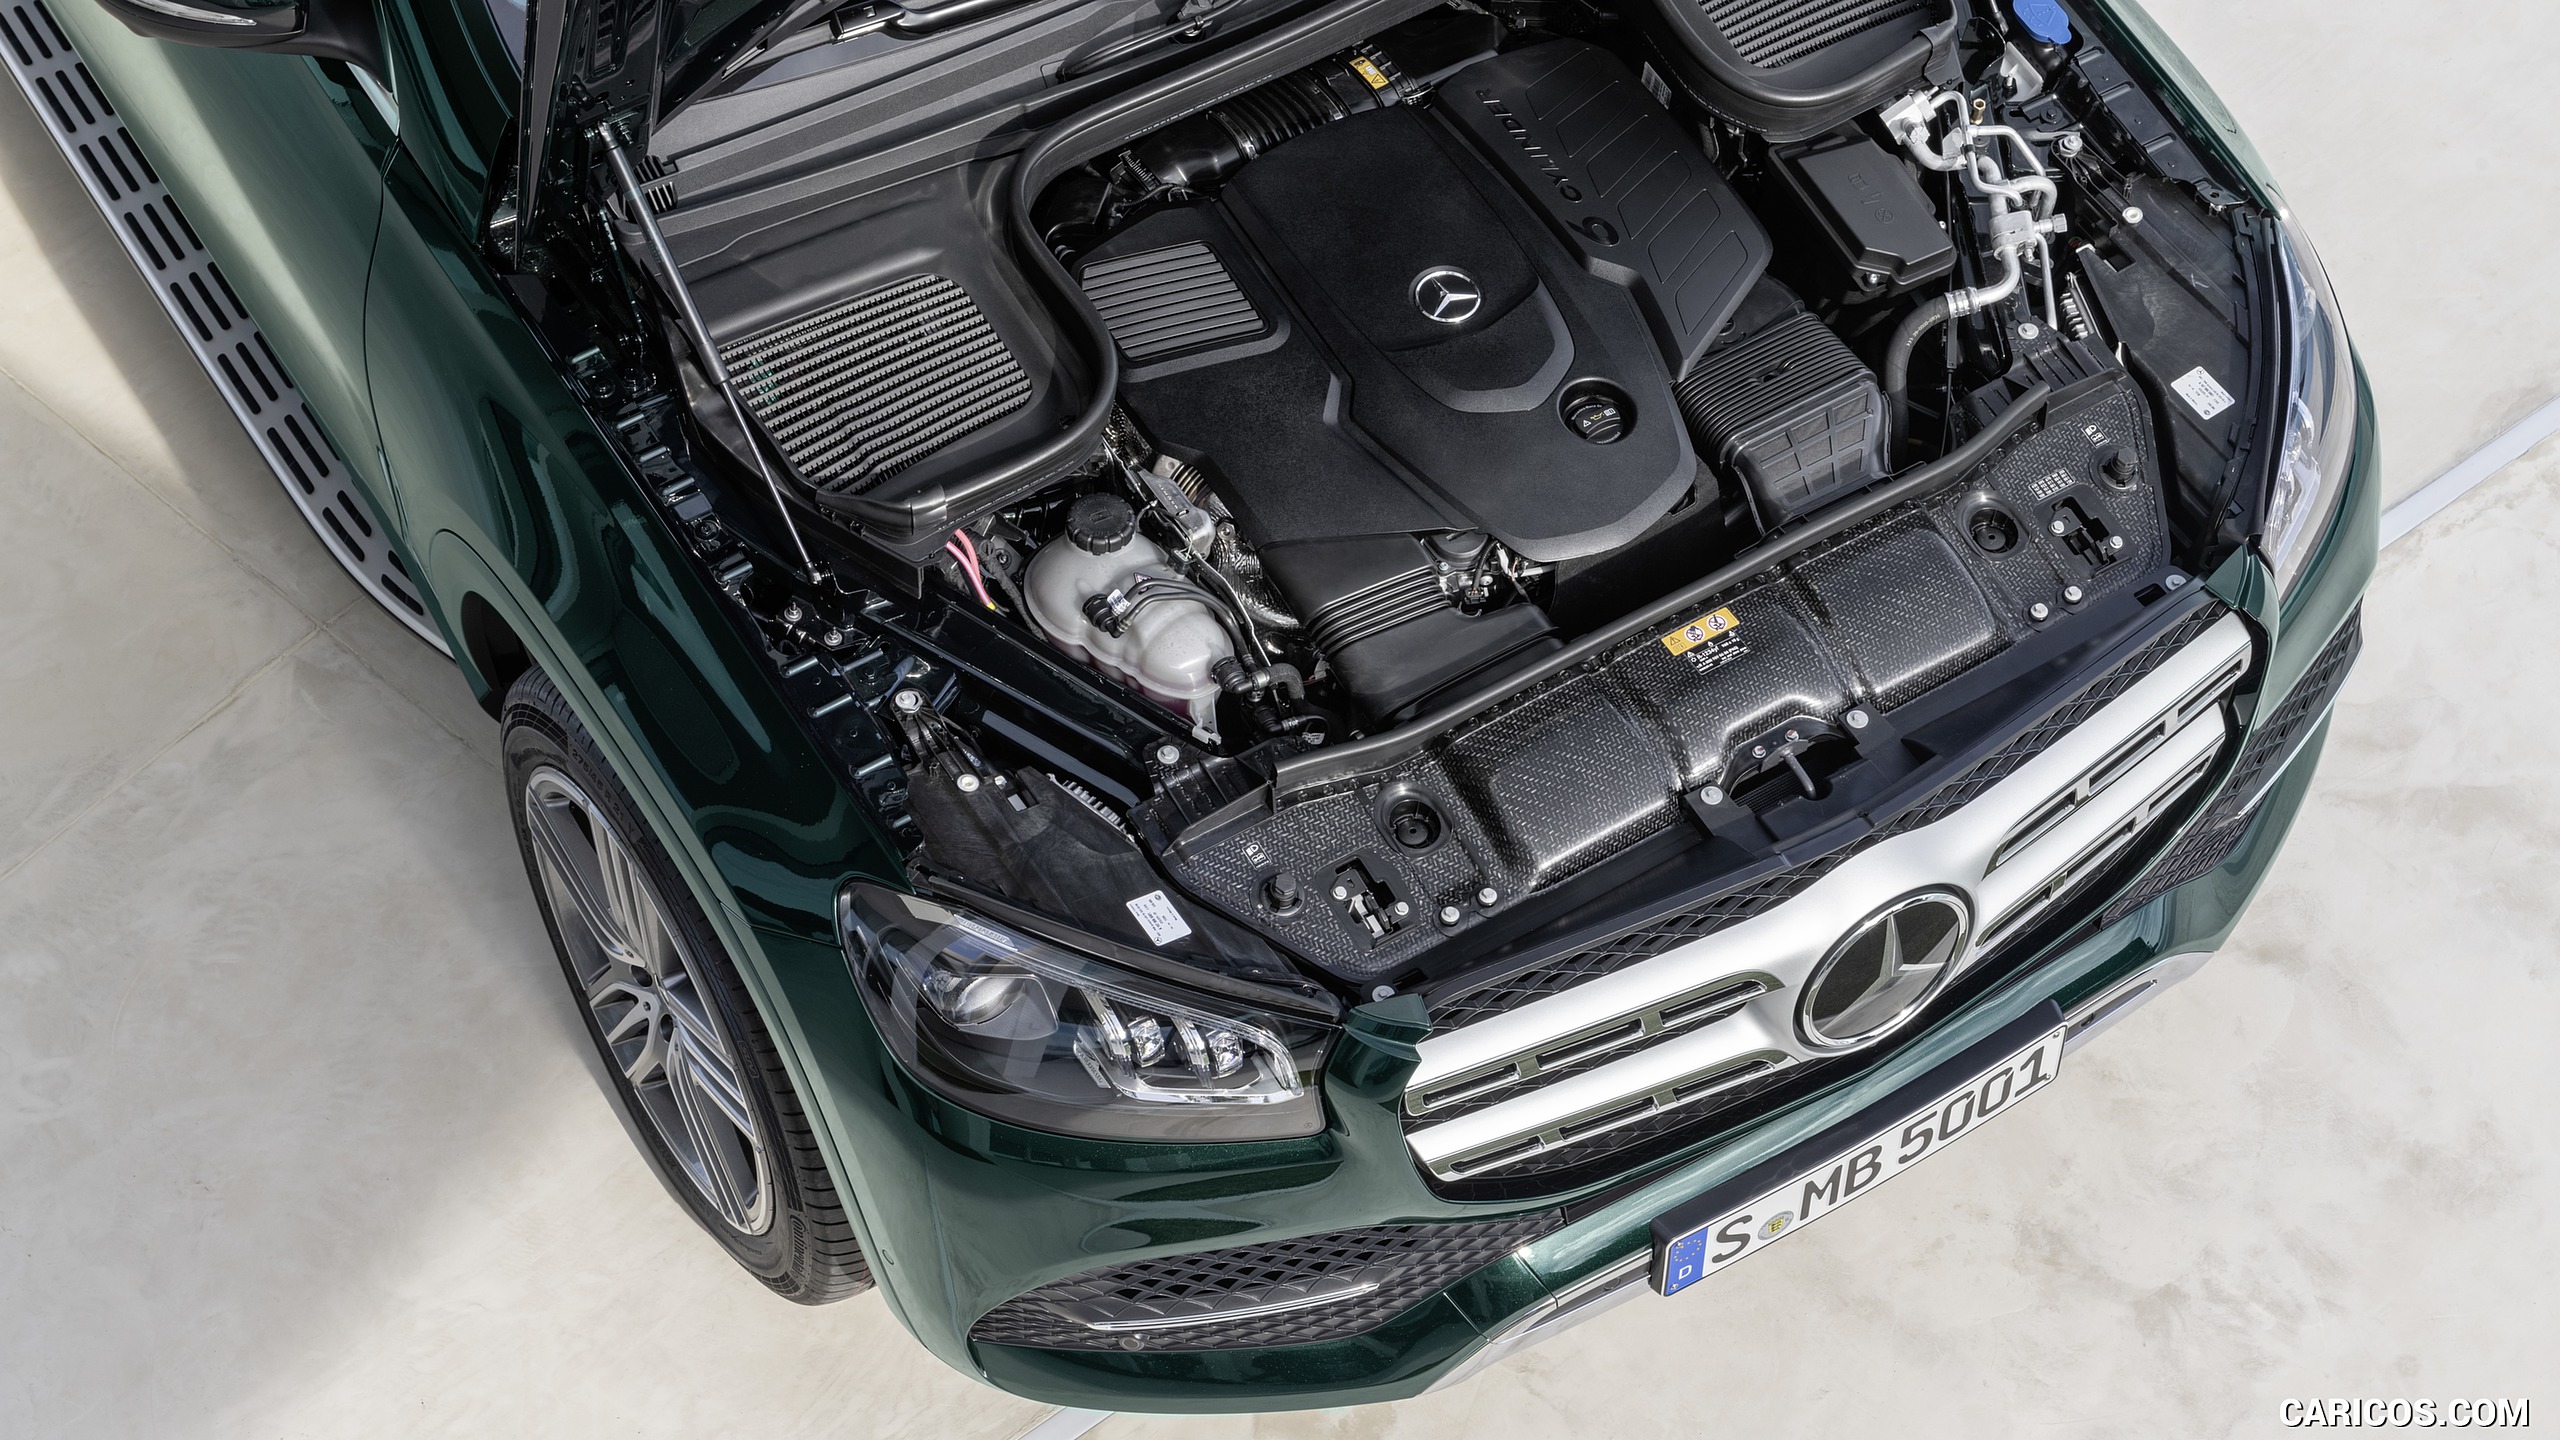 2020 Mercedes-Benz GLS (Color: Emerald Green) - Engine, #72 of 427